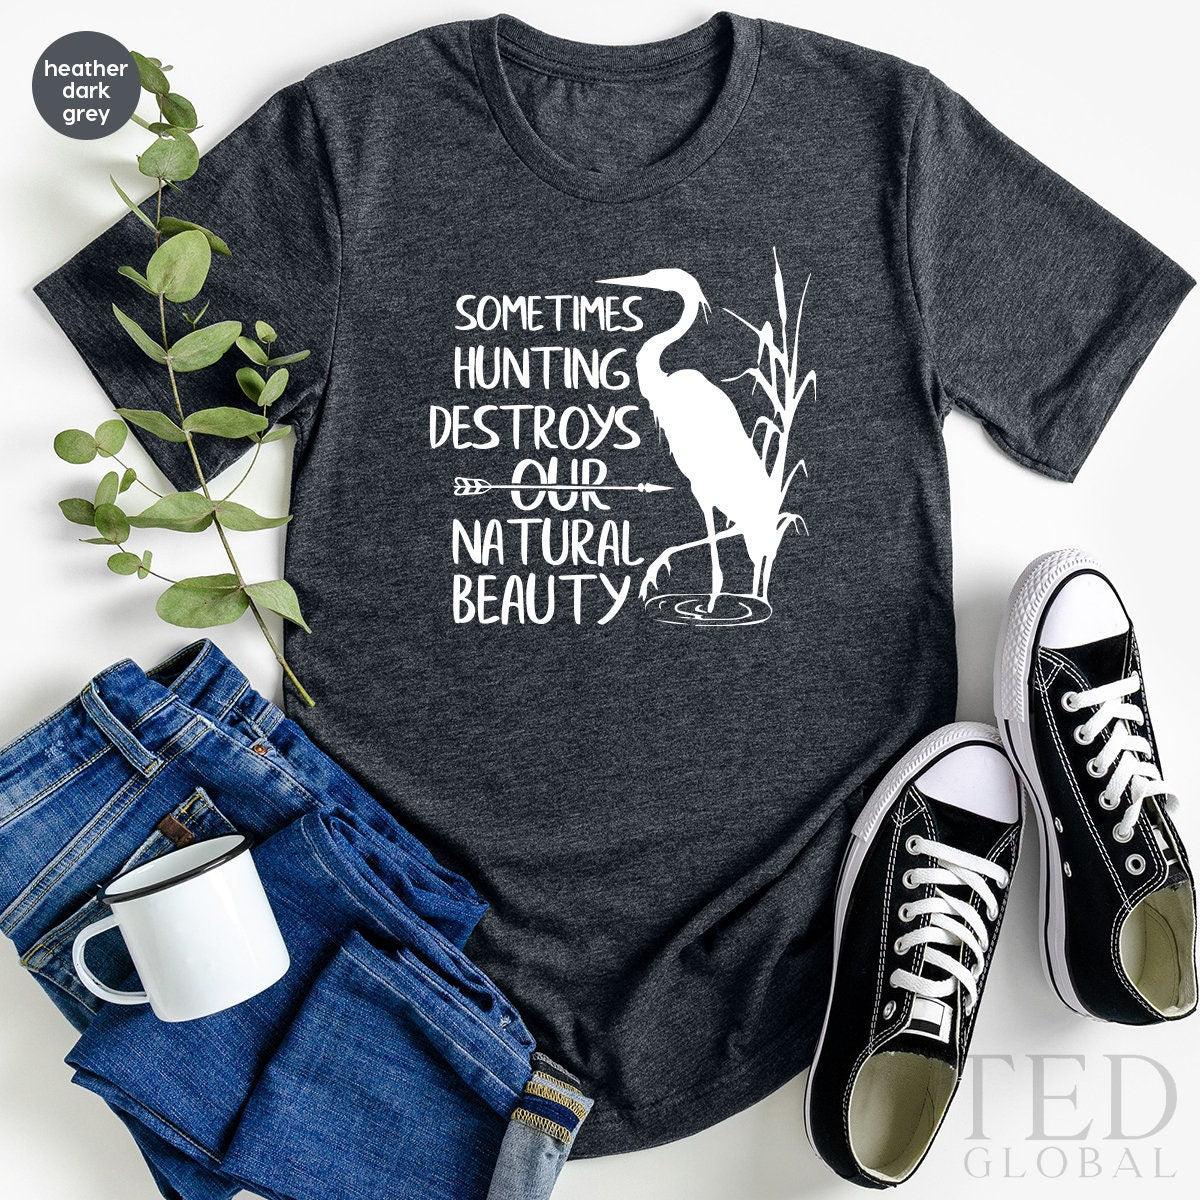 Anti-Hunter TShirt, Environment T-Shirt, Nature Lover T Shirt, Protect Animals Shirt, Love Wildlife Shirt, Gifts For Vegans, Hunting Hoodies - Fastdeliverytees.com